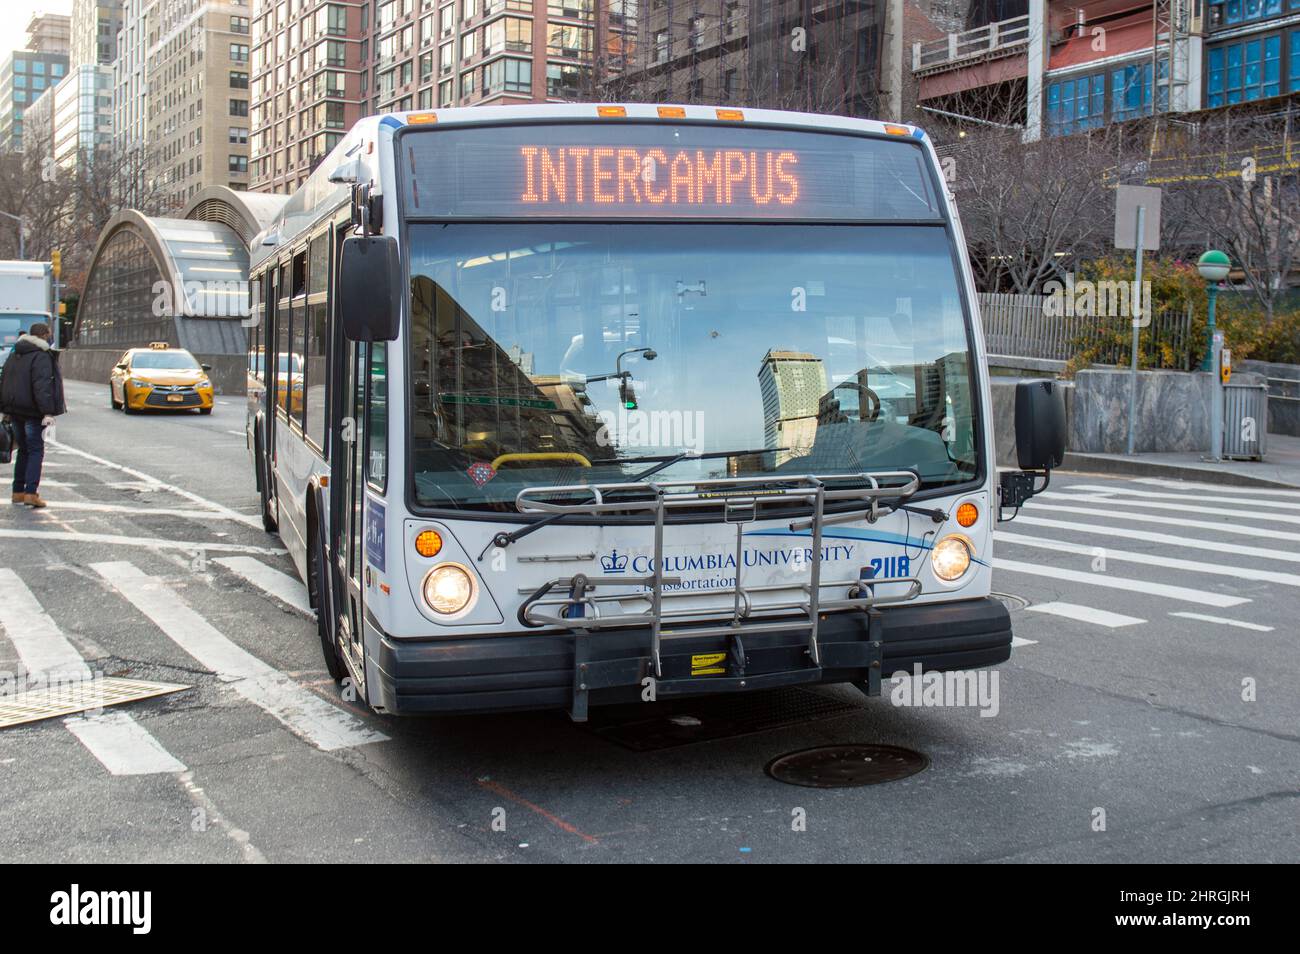 Columbia University Intercampus bus on Broadway Stock Photo - Alamy